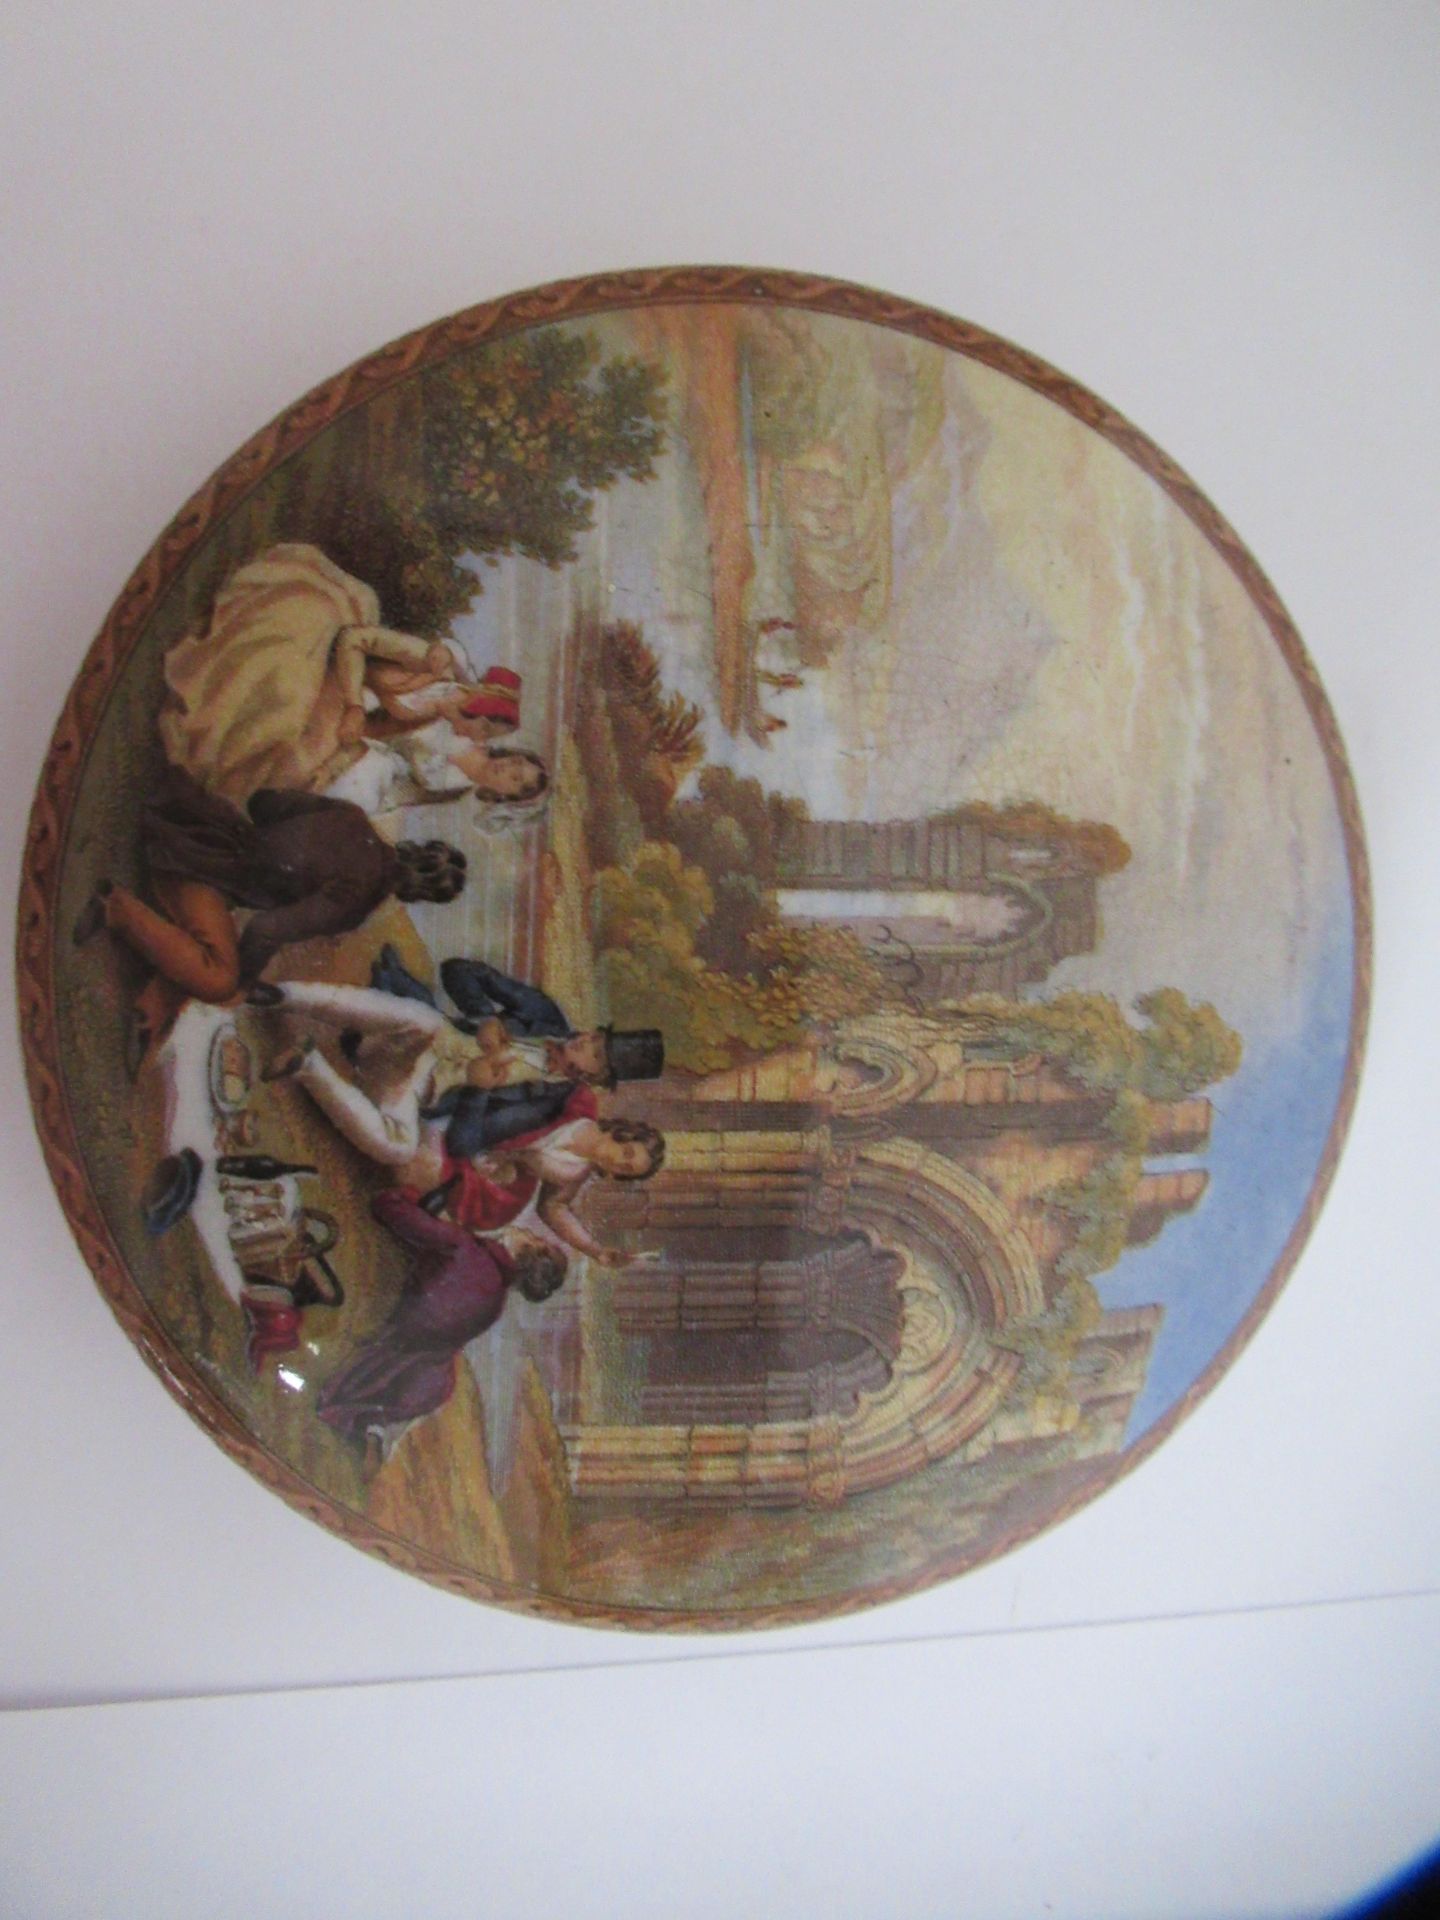 6x Prattware ceramic lids including 'The Best Card', 'Wimbledon July 2nd 1860', 'The Village Wedding - Image 2 of 22